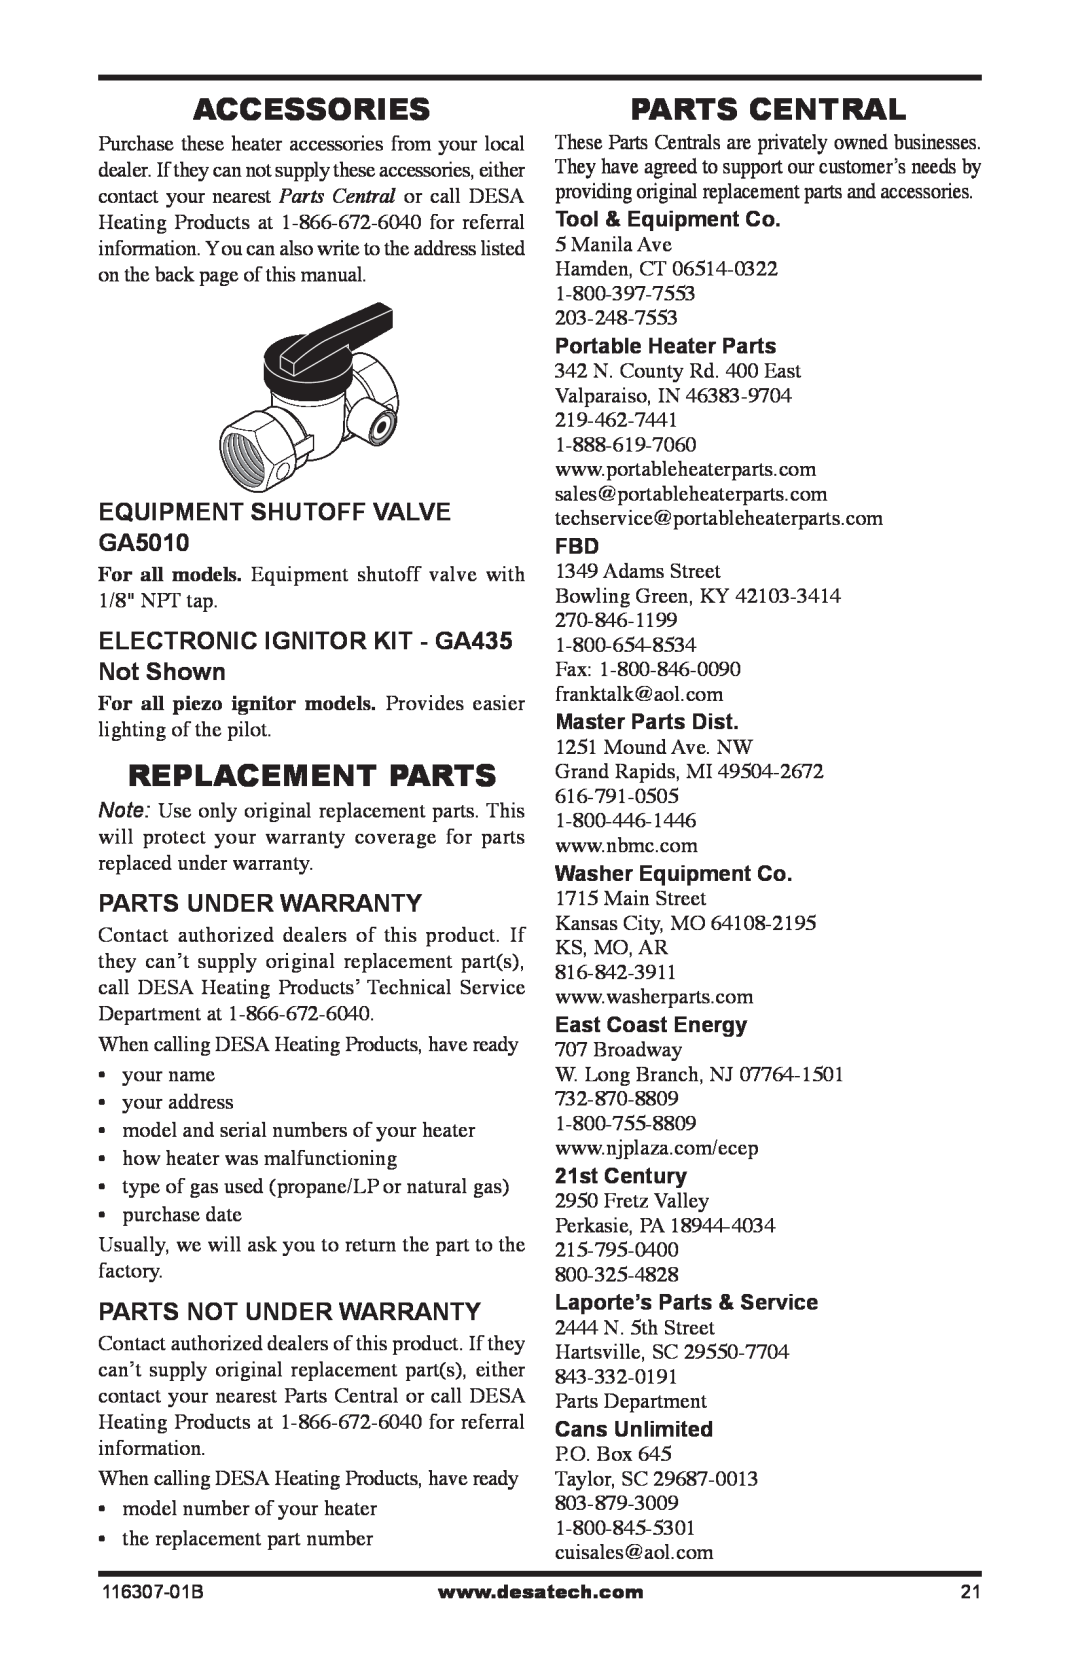 Desa SPC20NT, SPC20PT Accessories, Replacement Parts, Parts Central, EQUIPMENT SHUTOFF VALVE GA5010, Parts Under Warranty 